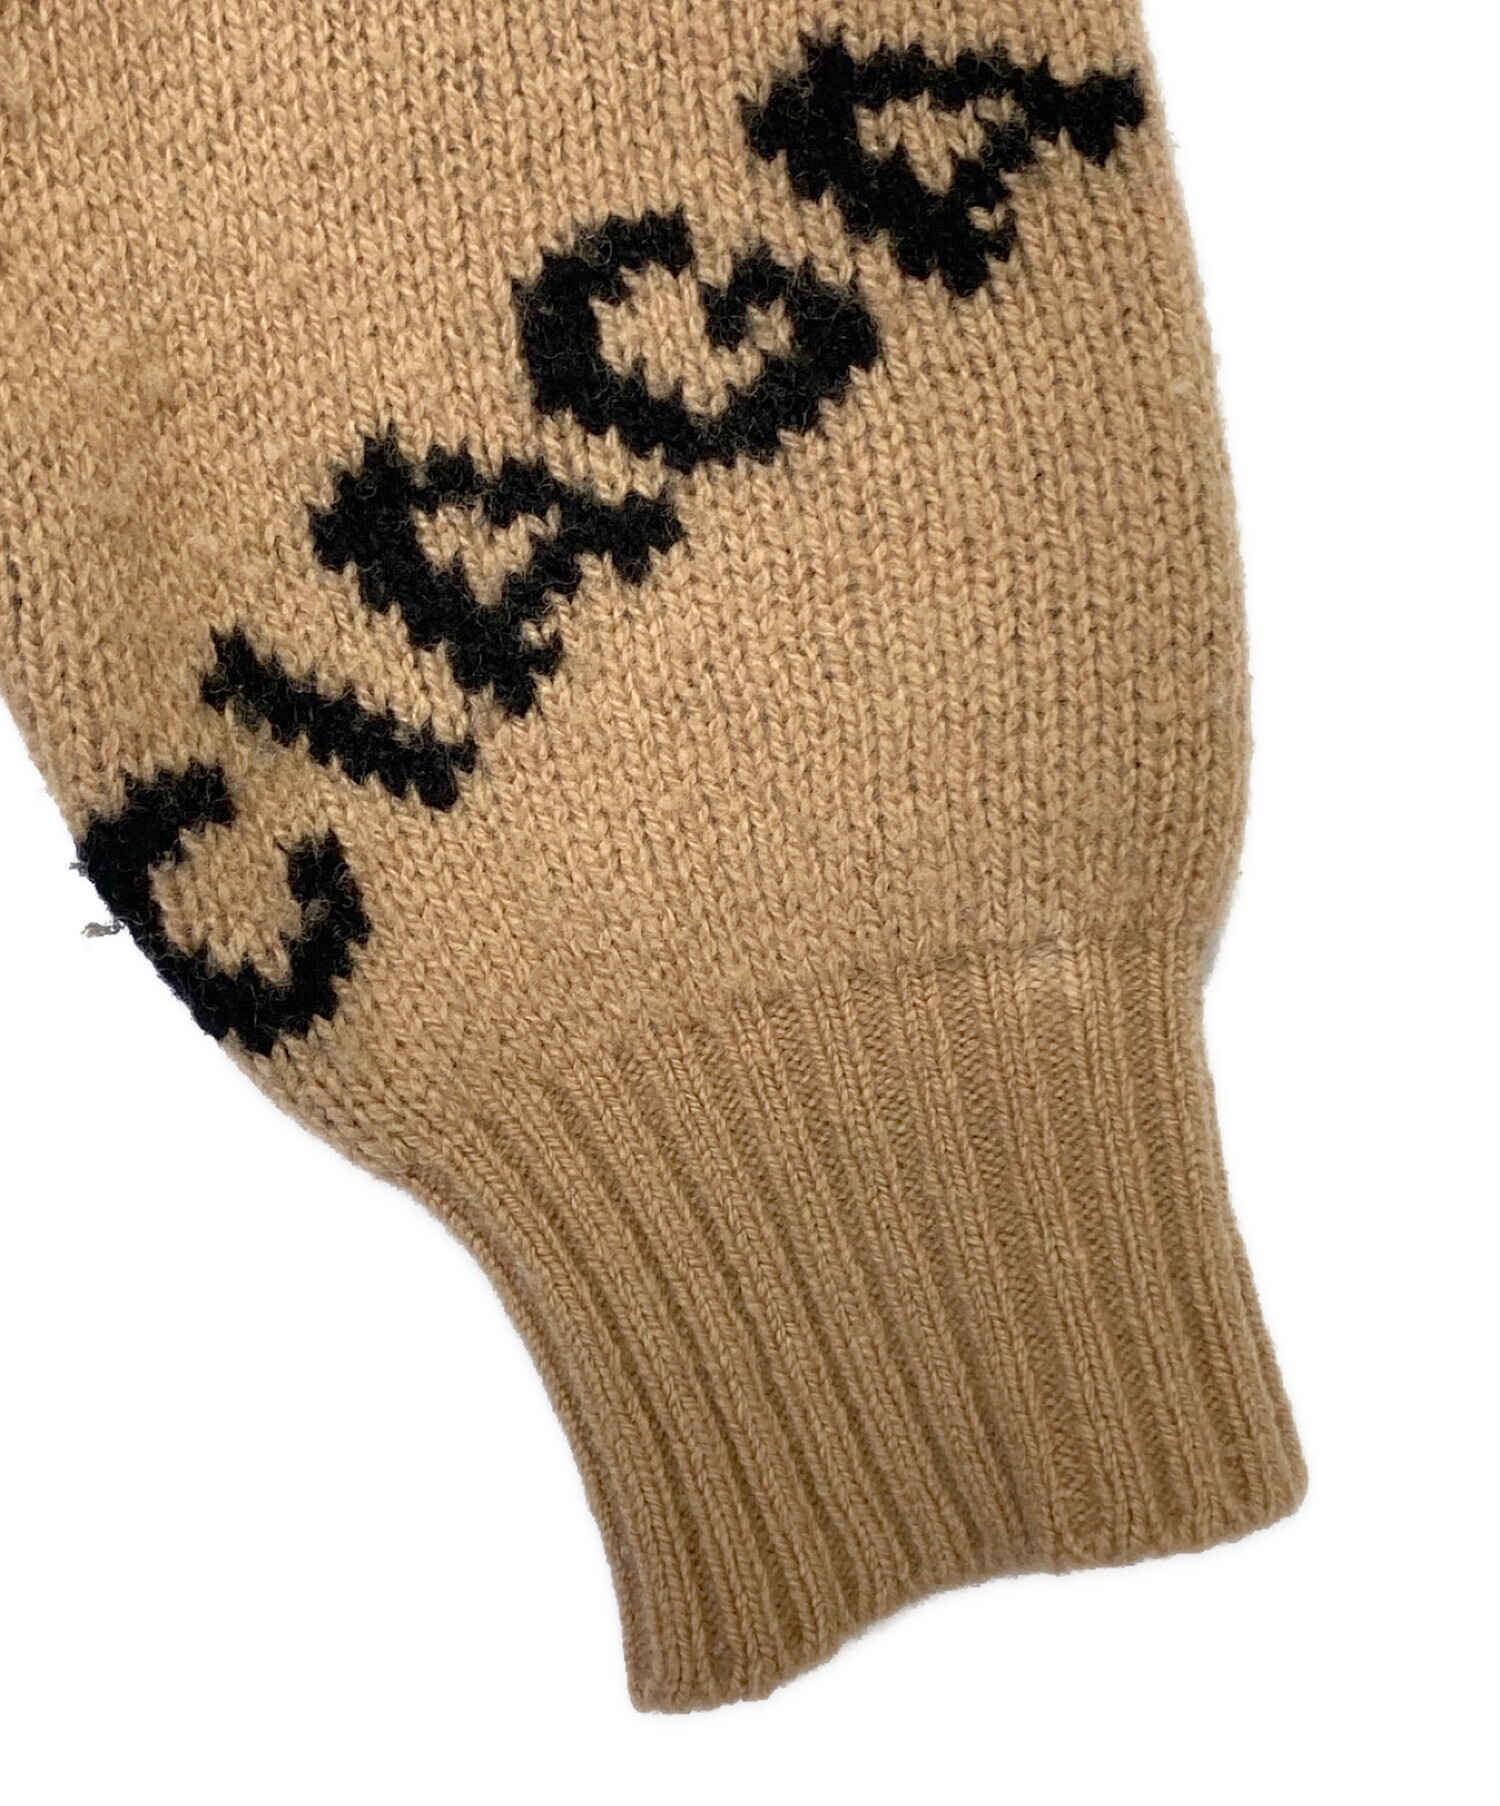 BALENCIAGA (バレンシアガ) Logo Jacquard Oversize Crew Neck Knit Sweater ベージュ×ブラック  サイズ:XS